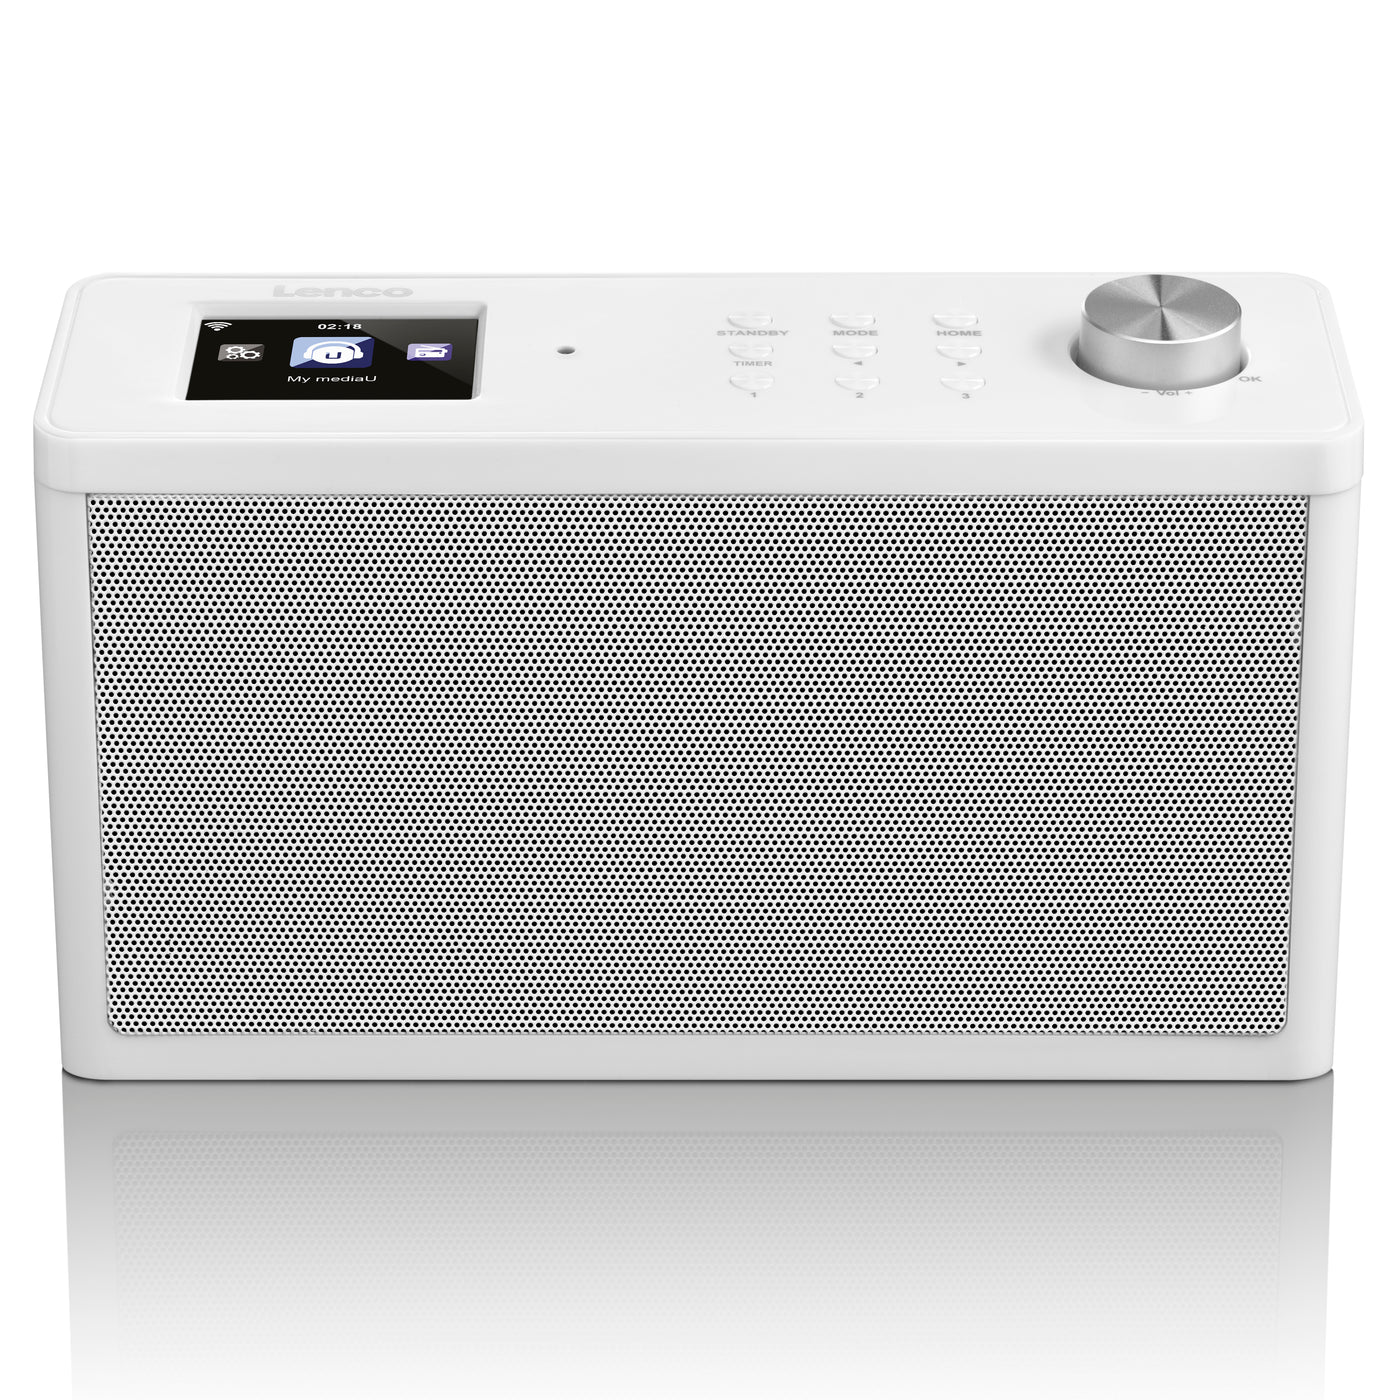 LENCO KCR-14 - Kitchen internet radio with FM - White